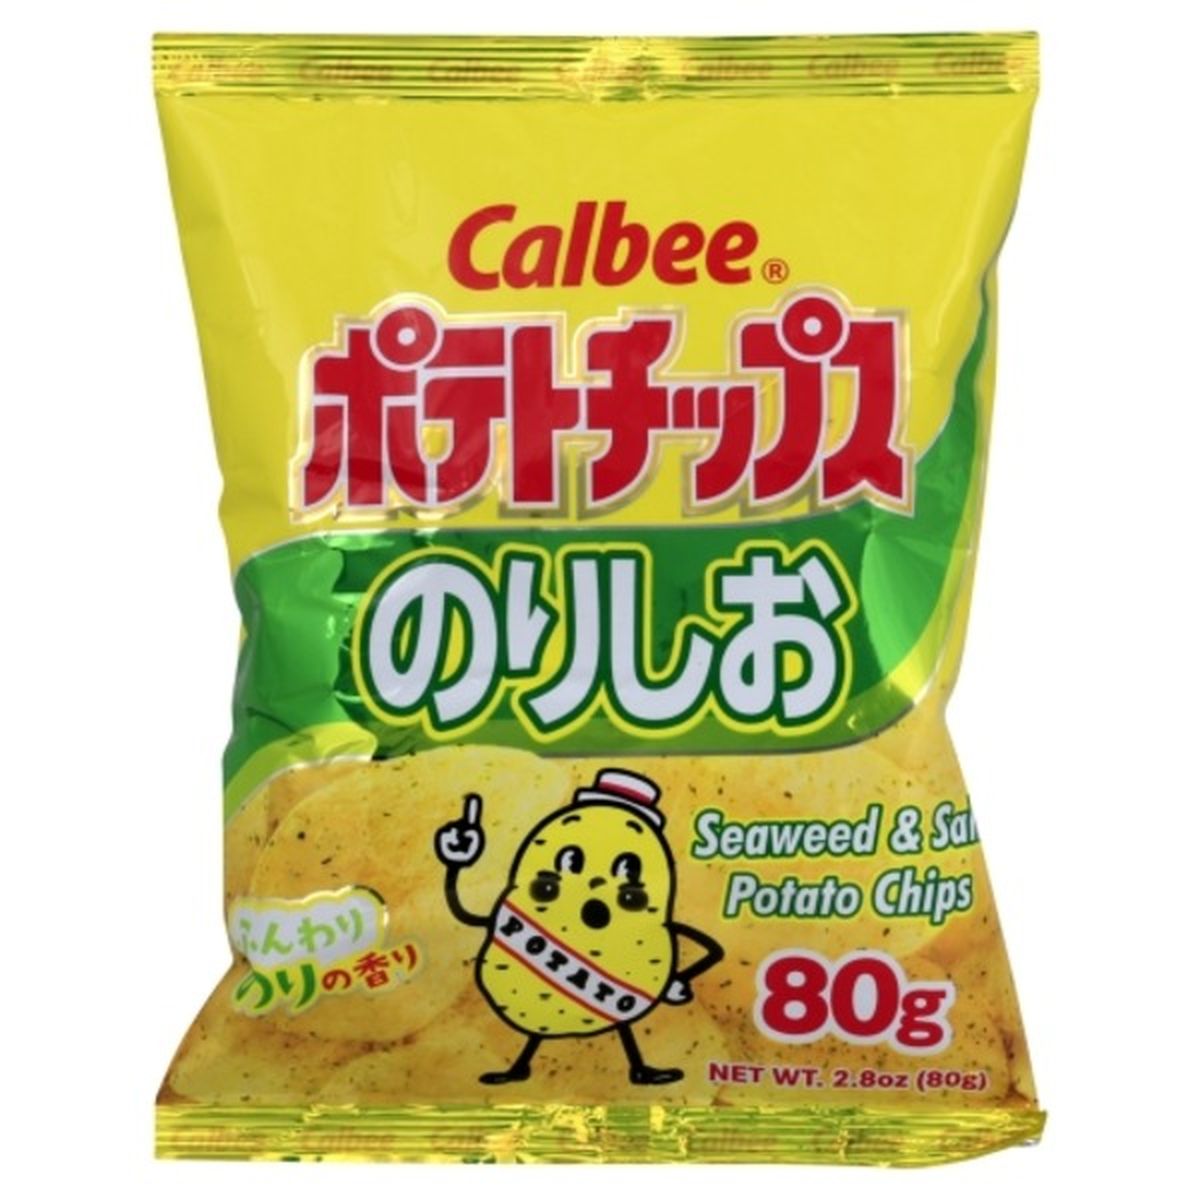 Calories in Calbee Potato Chips, Seaweed & Salt